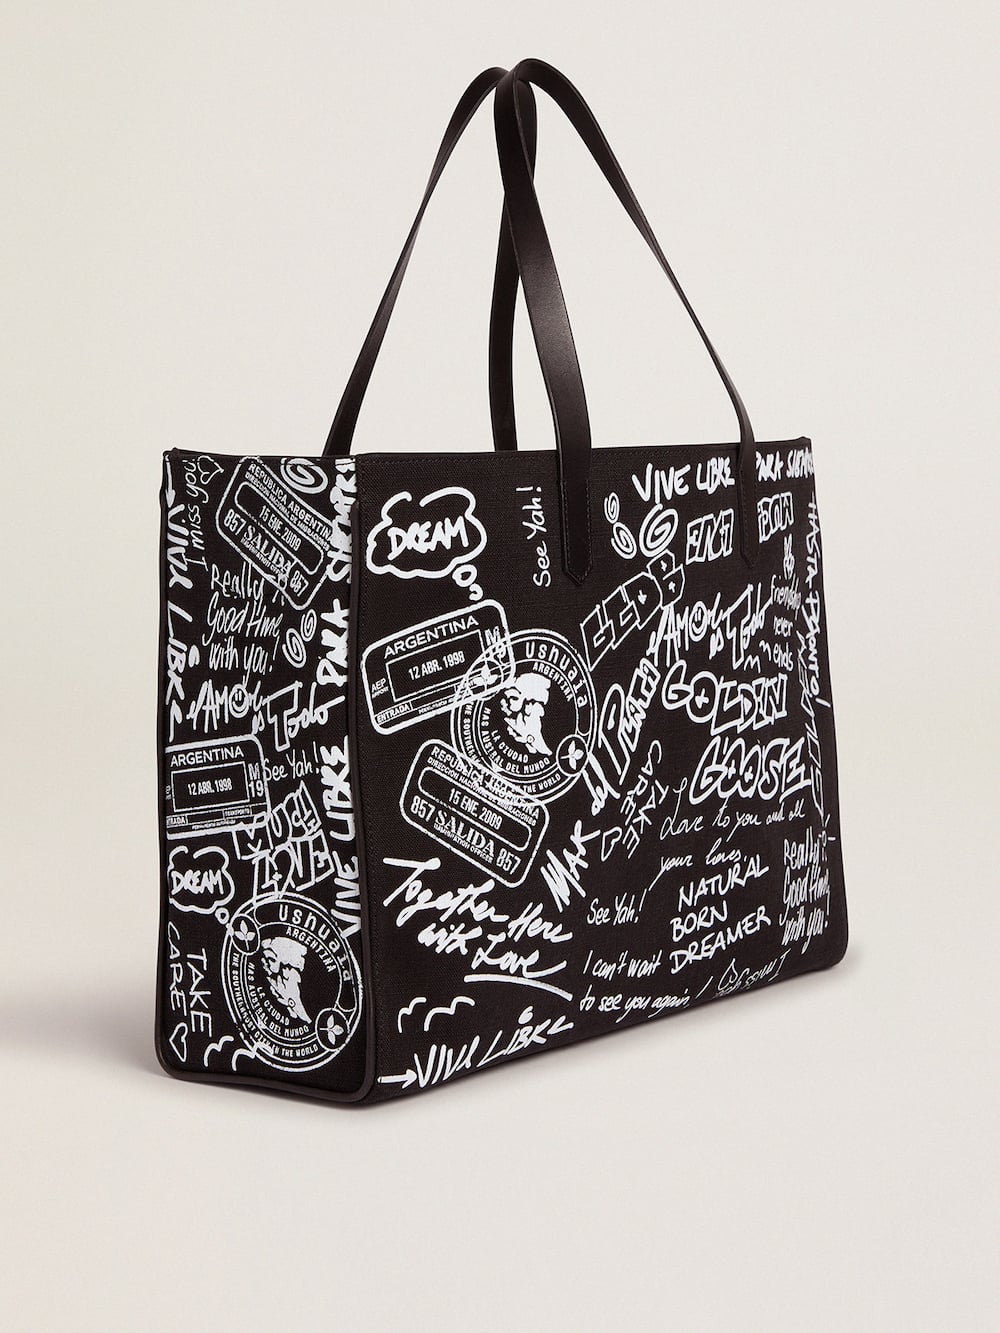 Golden Goose - Sac California Bag East-West noir avec imprimé graffiti blanc contrasté in 